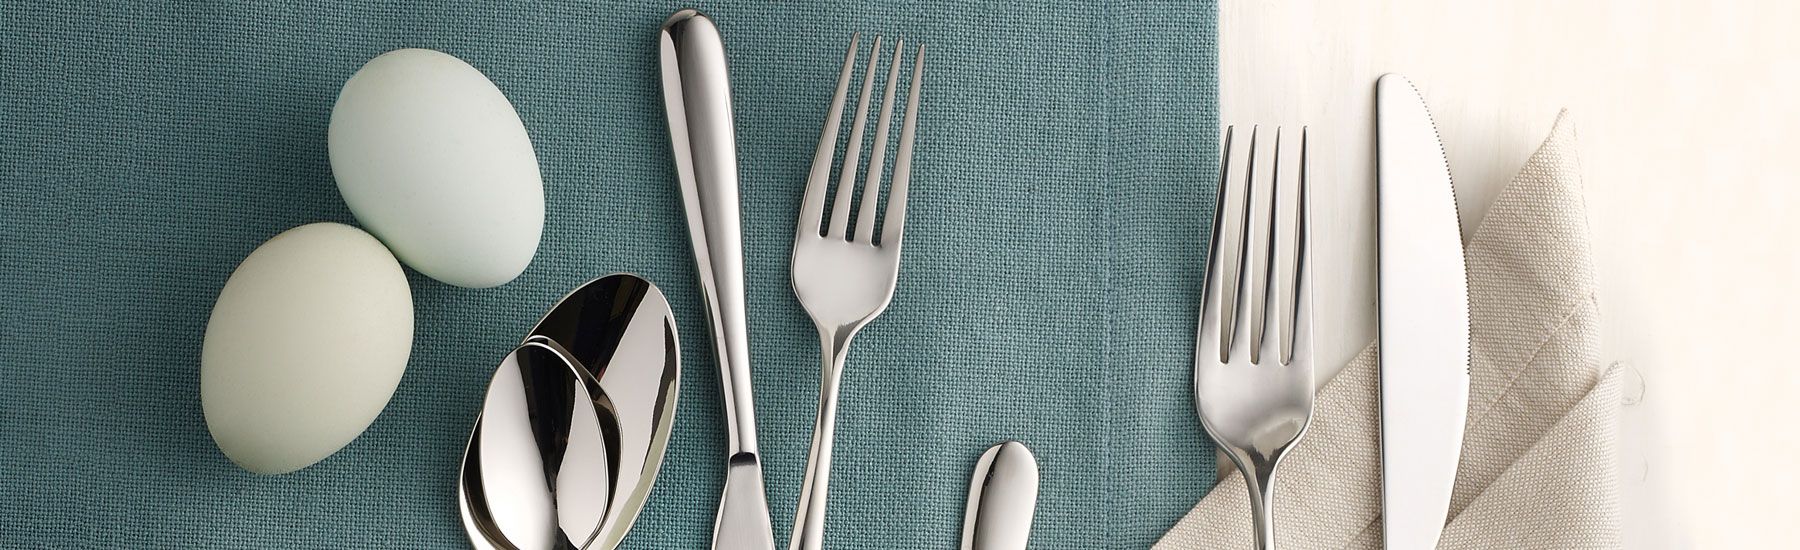 cutlery setting